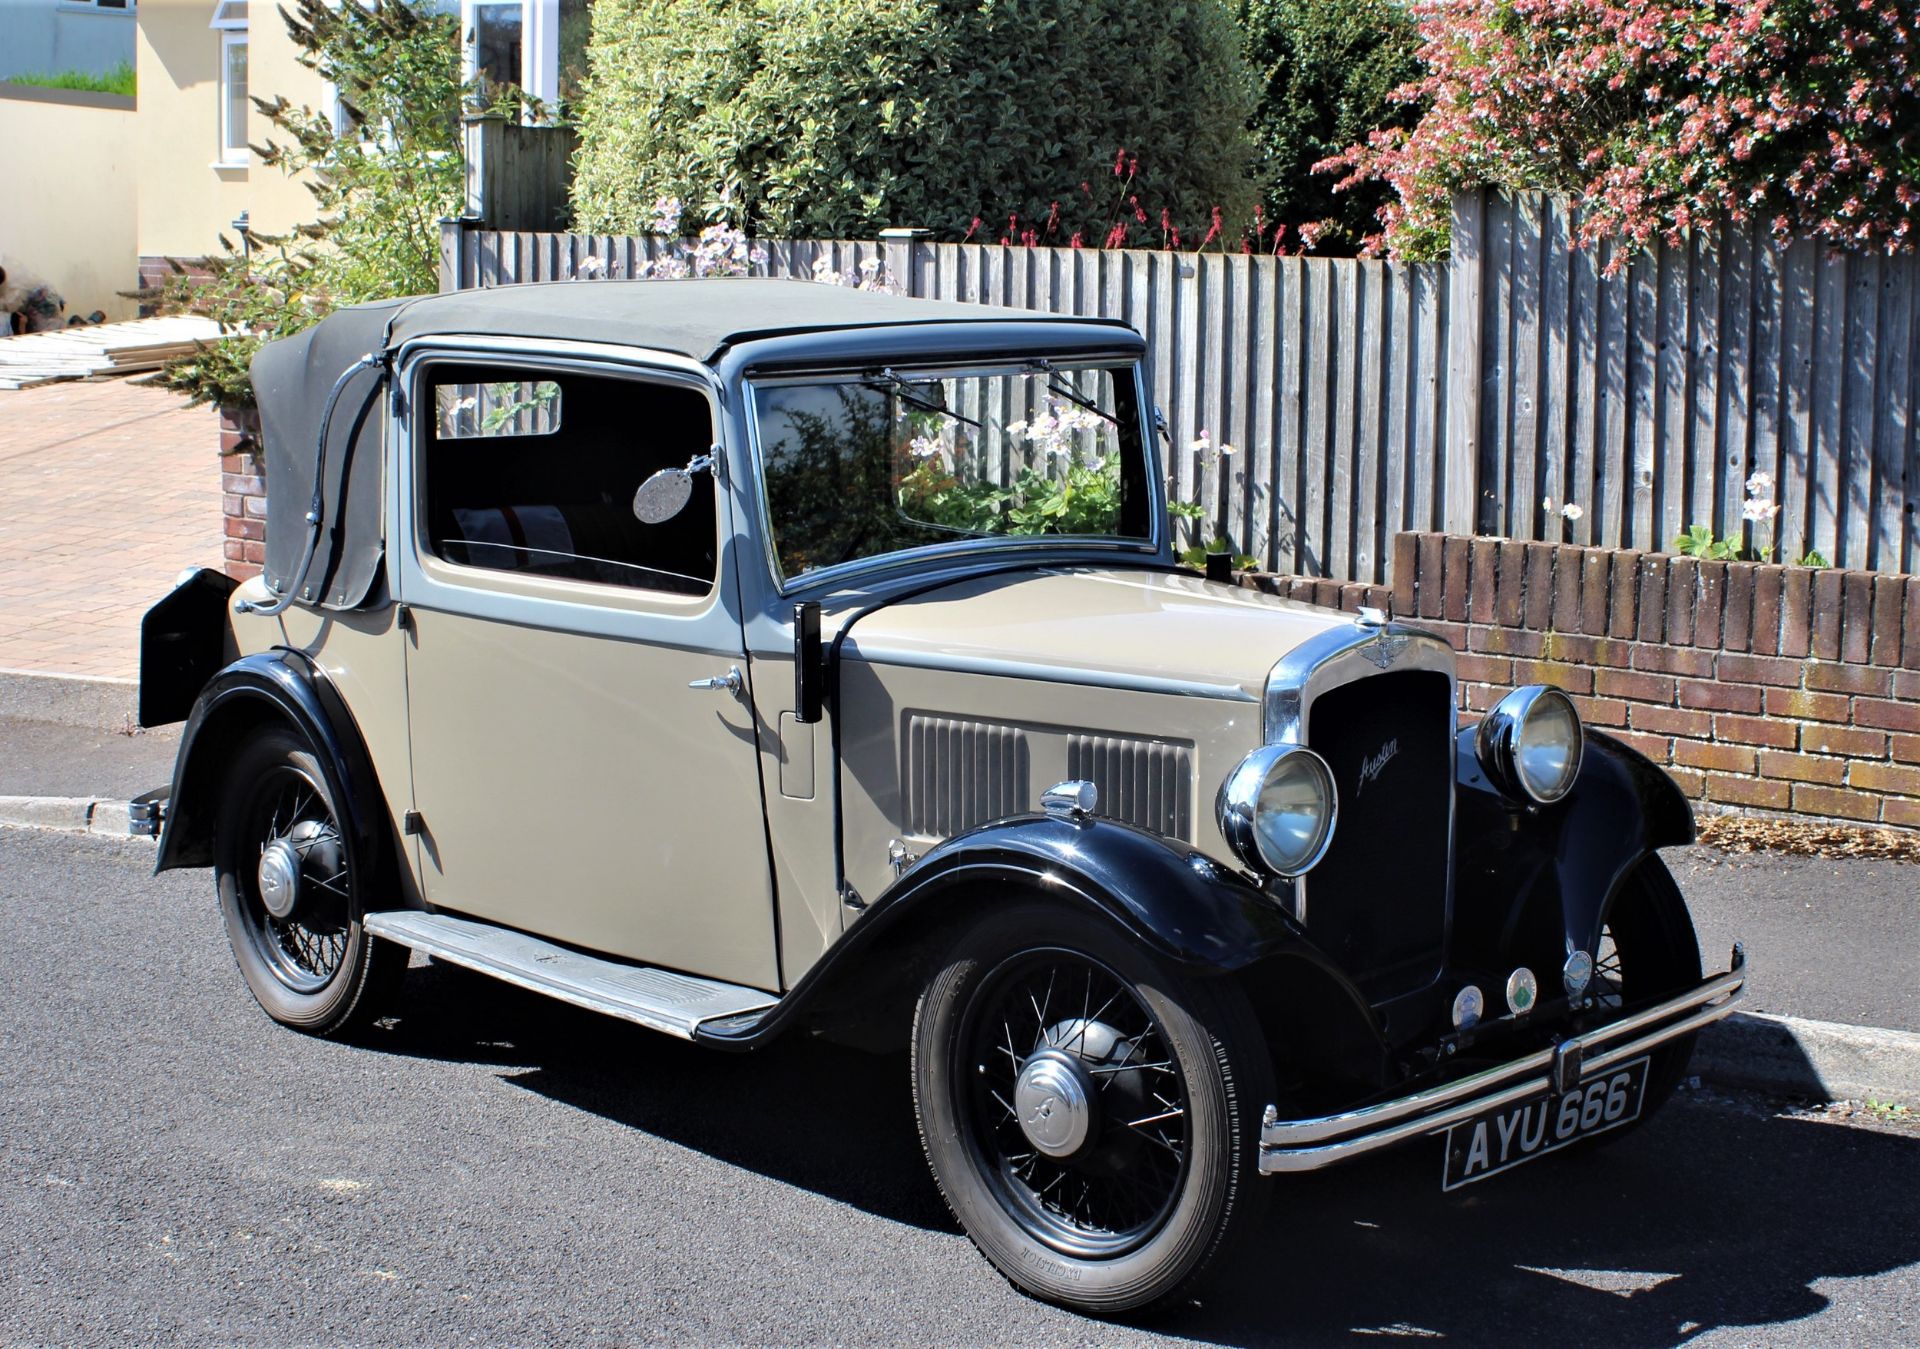 1934 AUSTIN 10 CABRIOLET Registration Number: AYU 666 Chassis Number: G38952 - First owner for 56